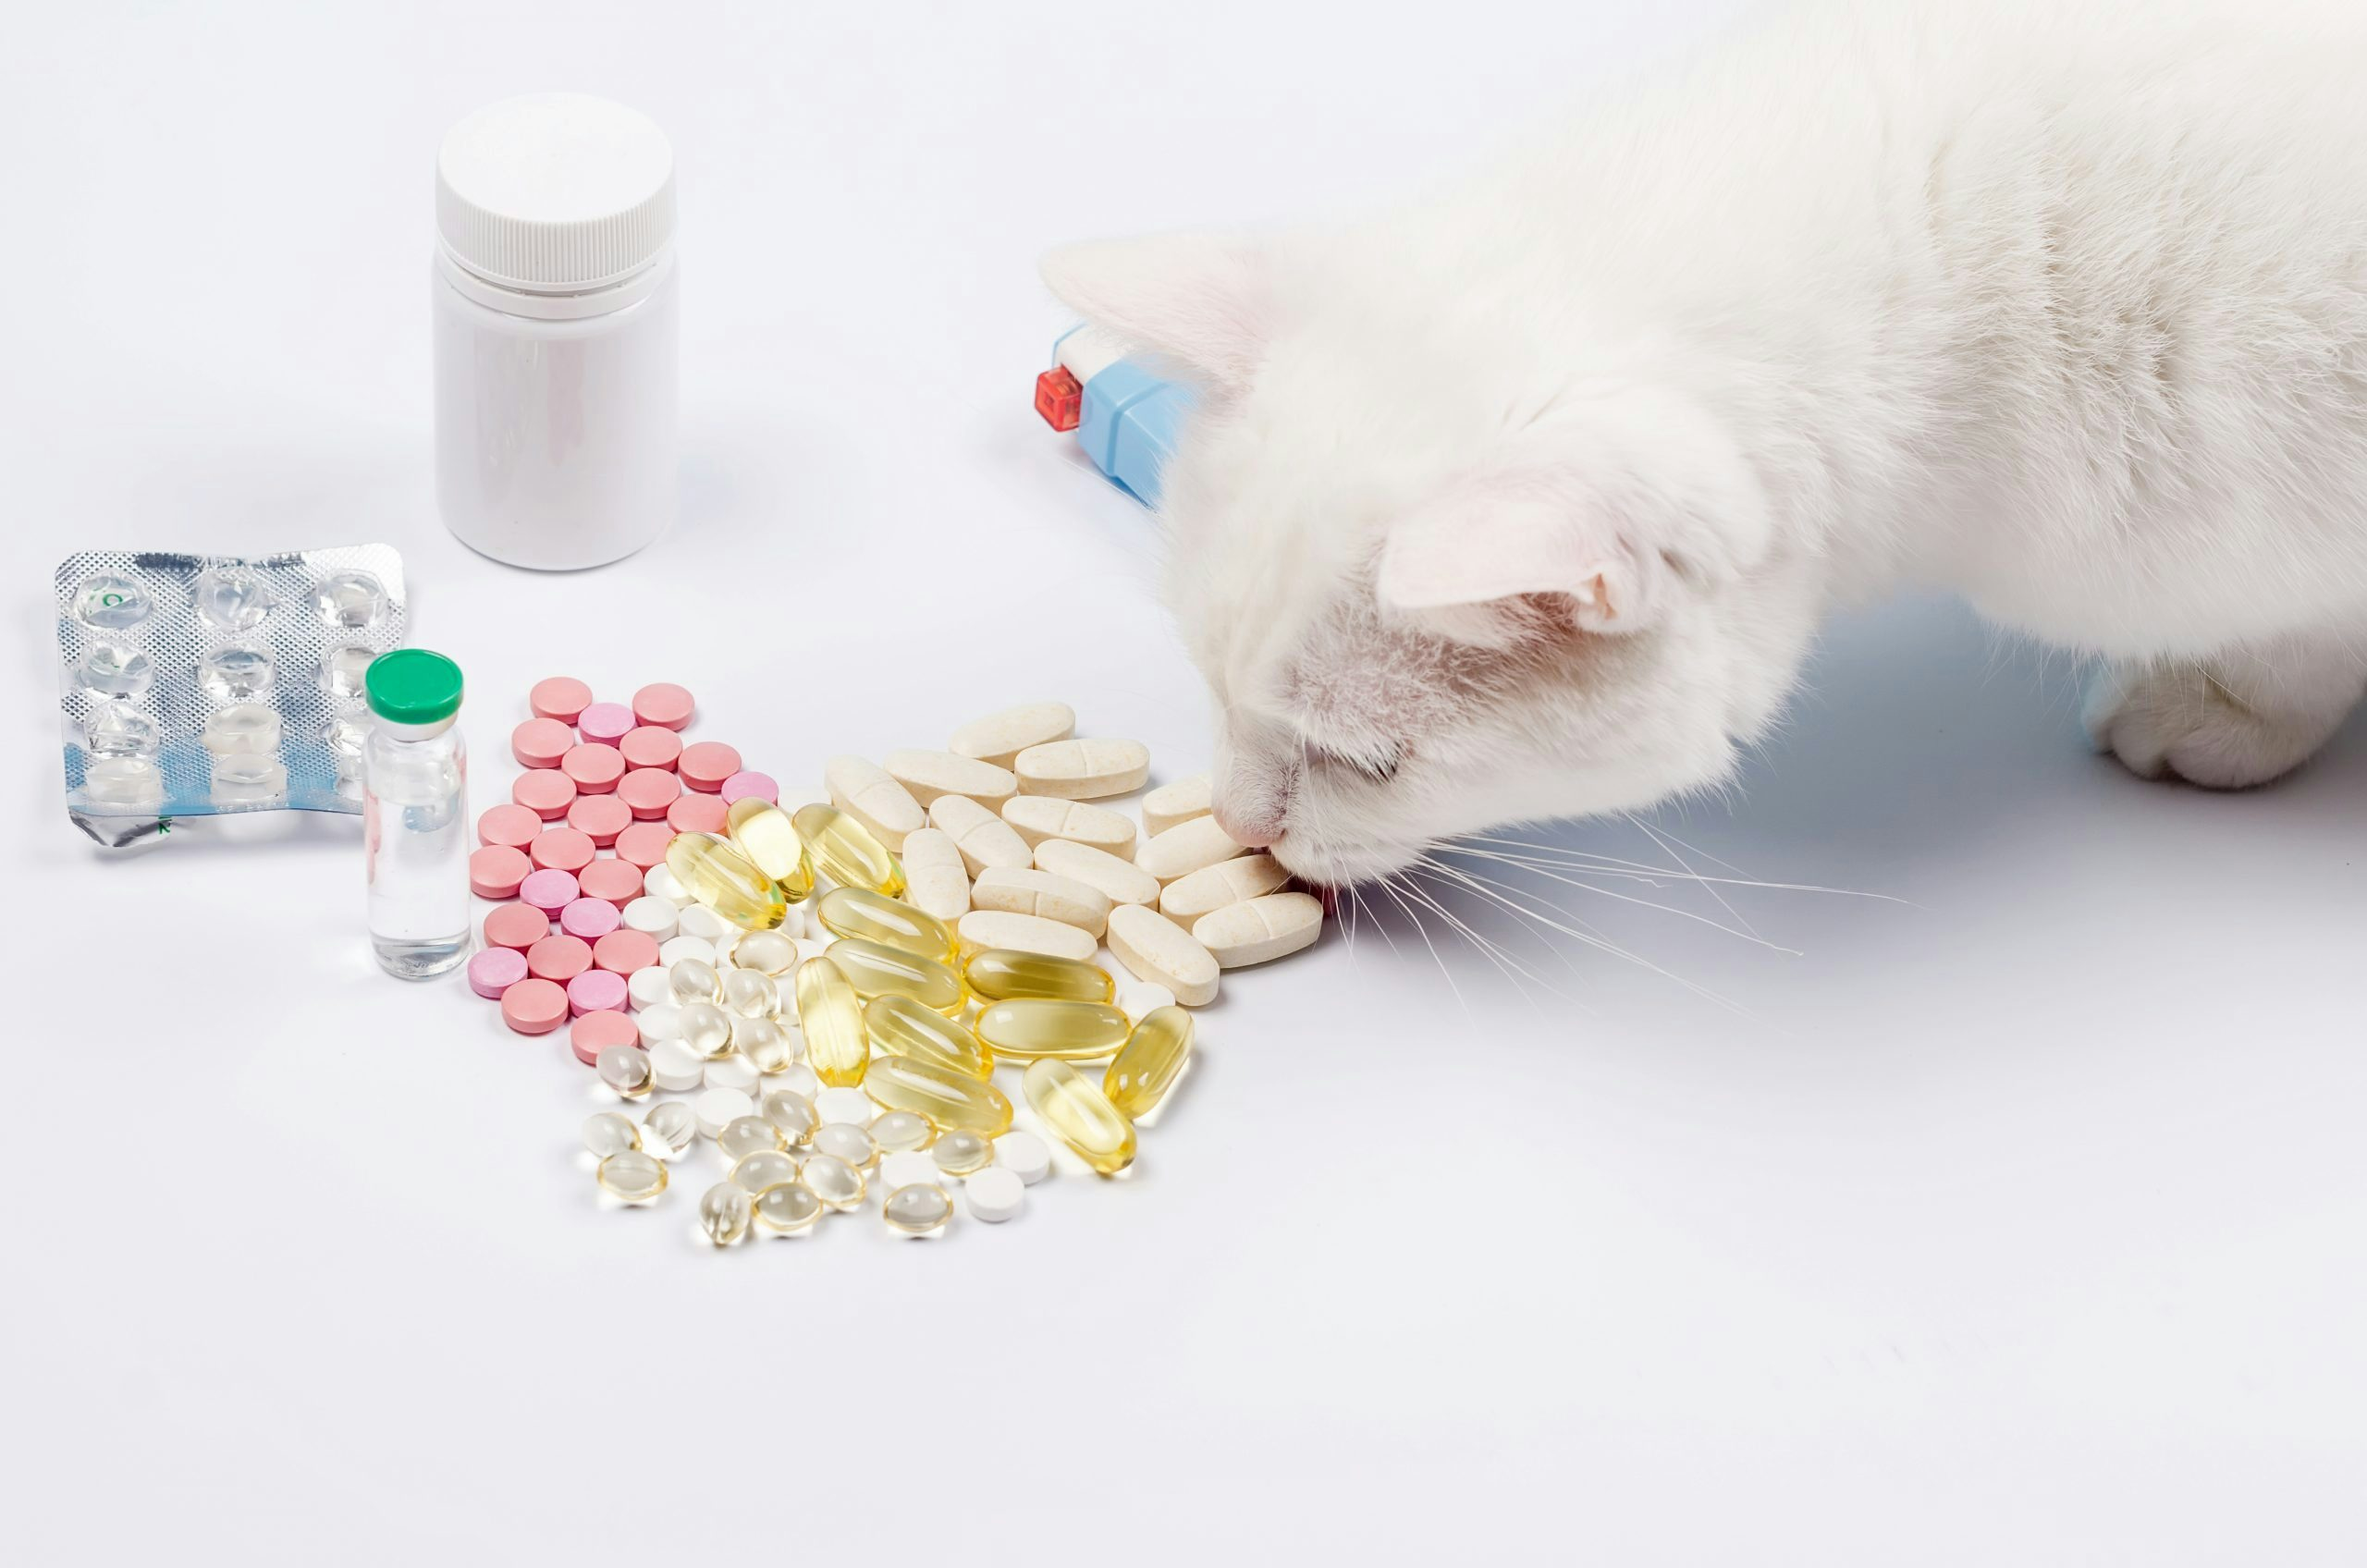 Let's make veterinary tablets